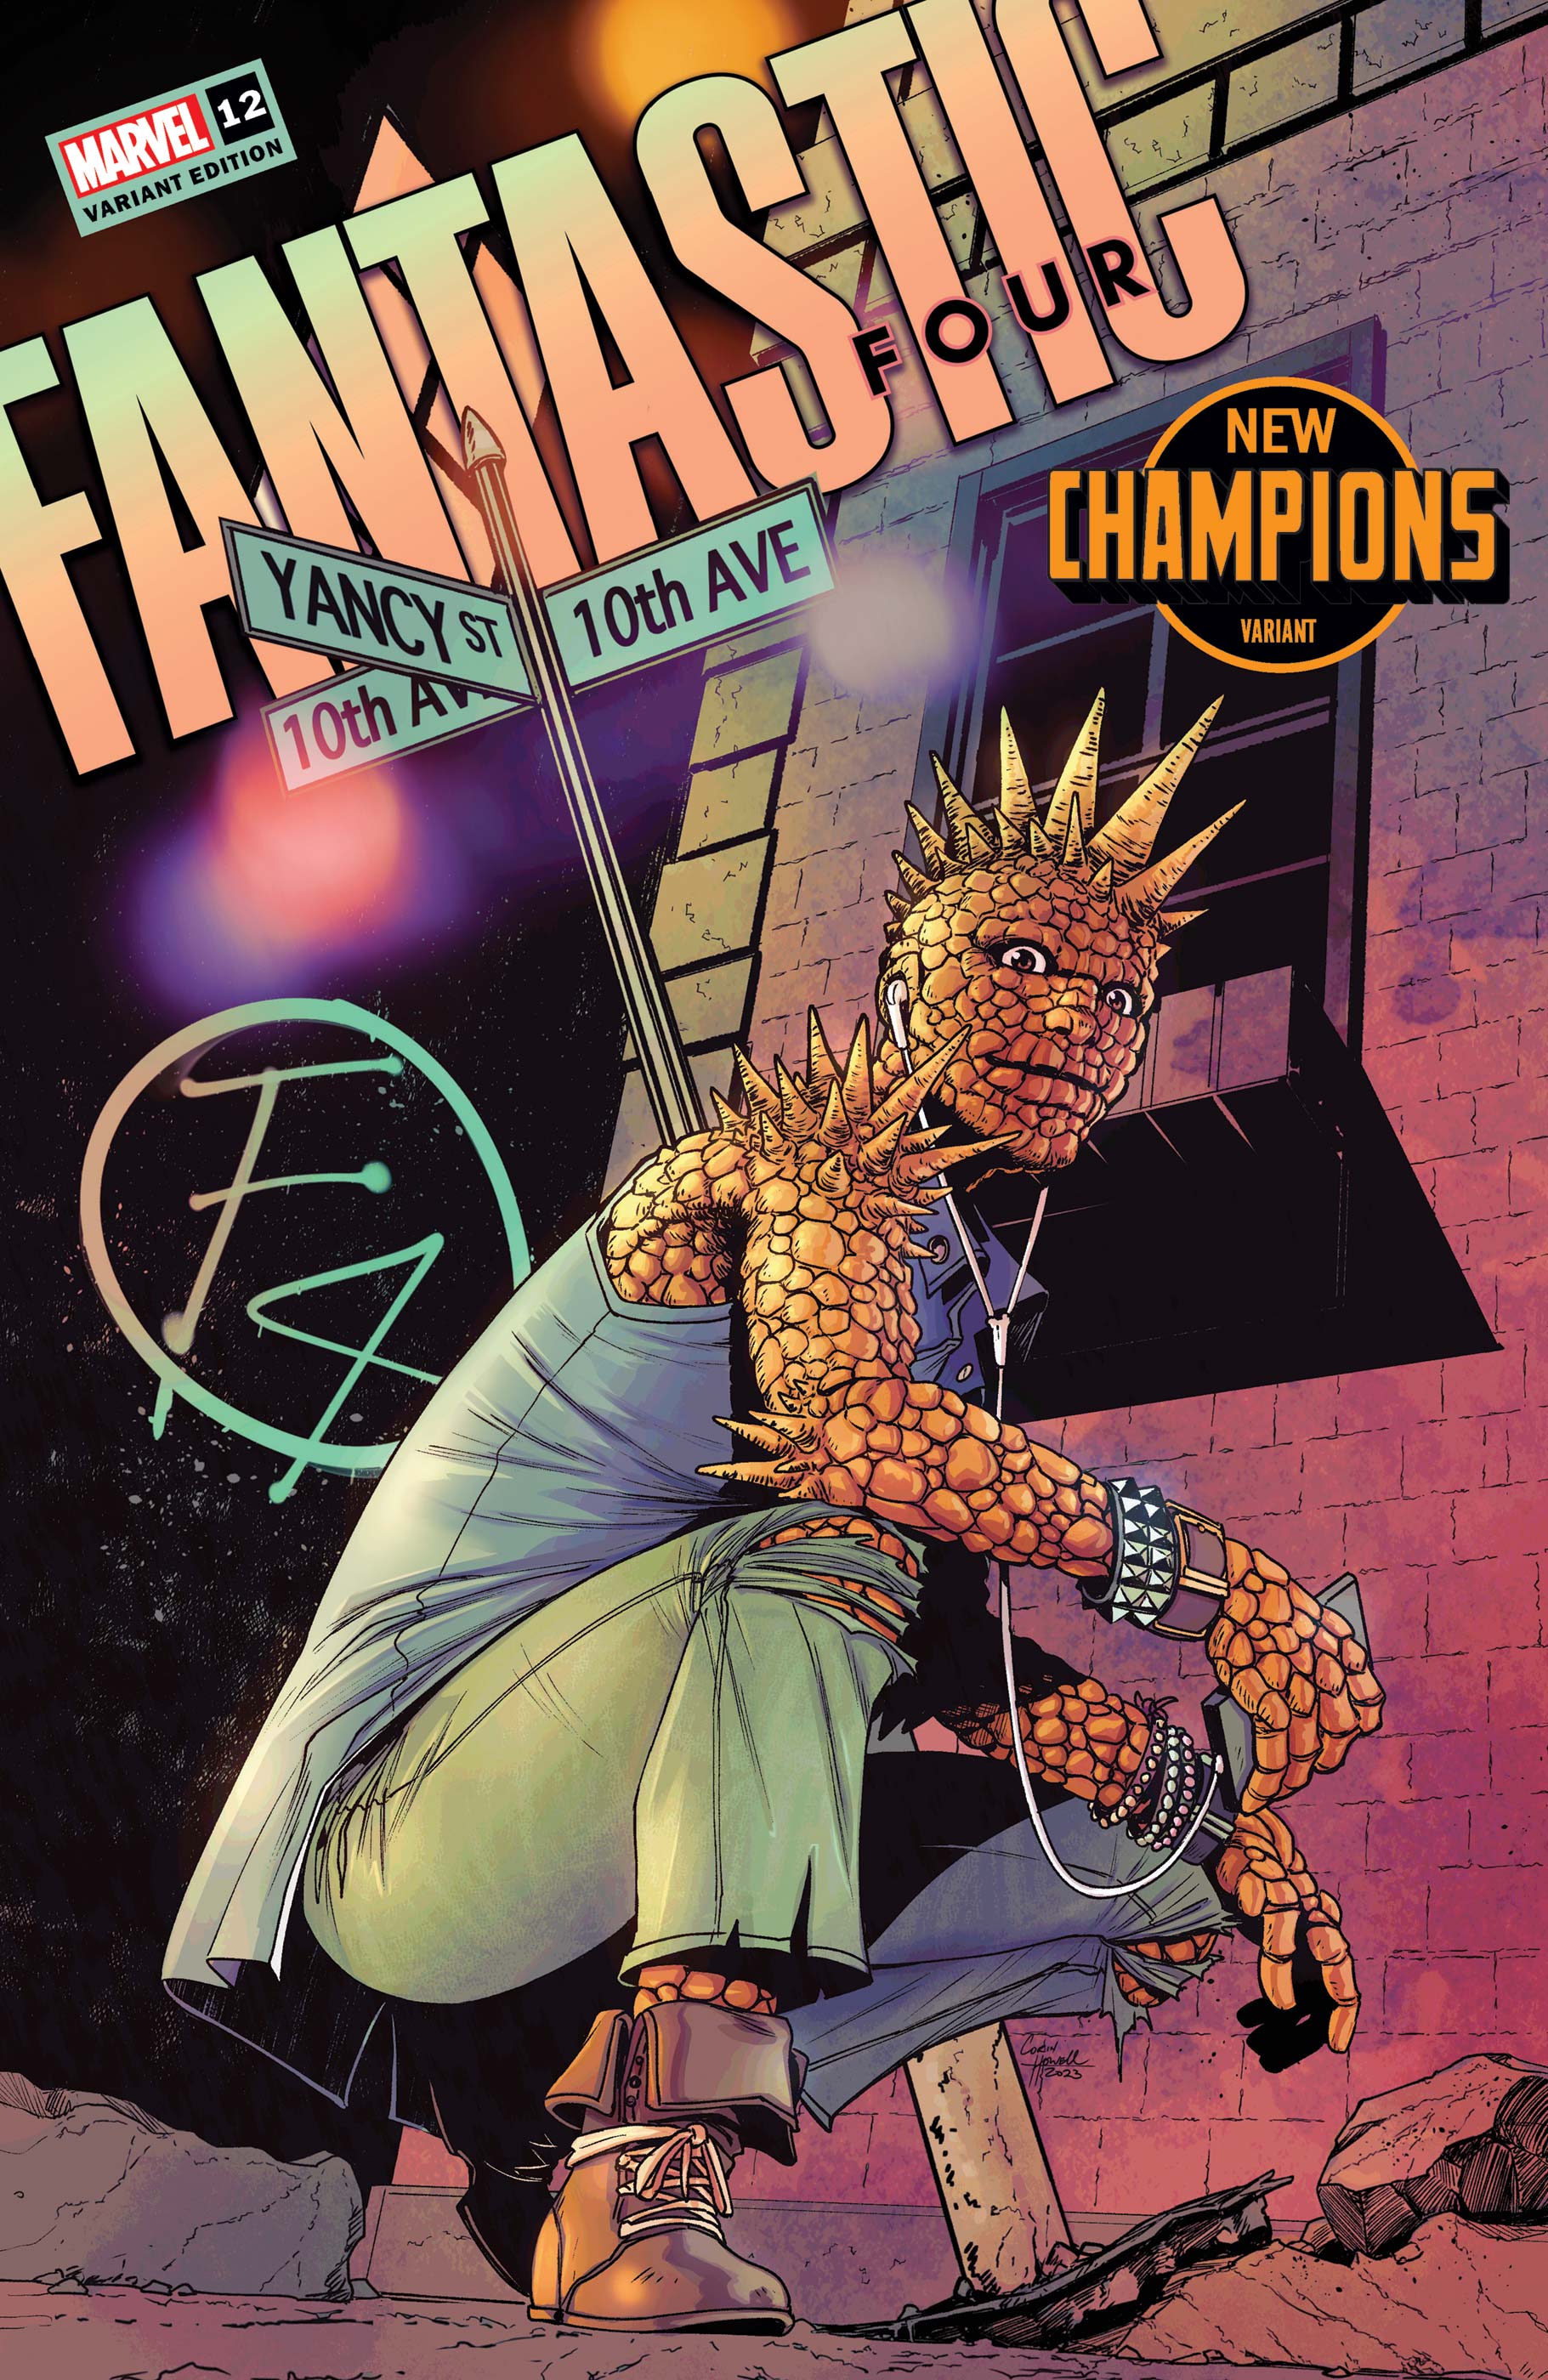 Fantastic Four (2022) #12 (Variant)